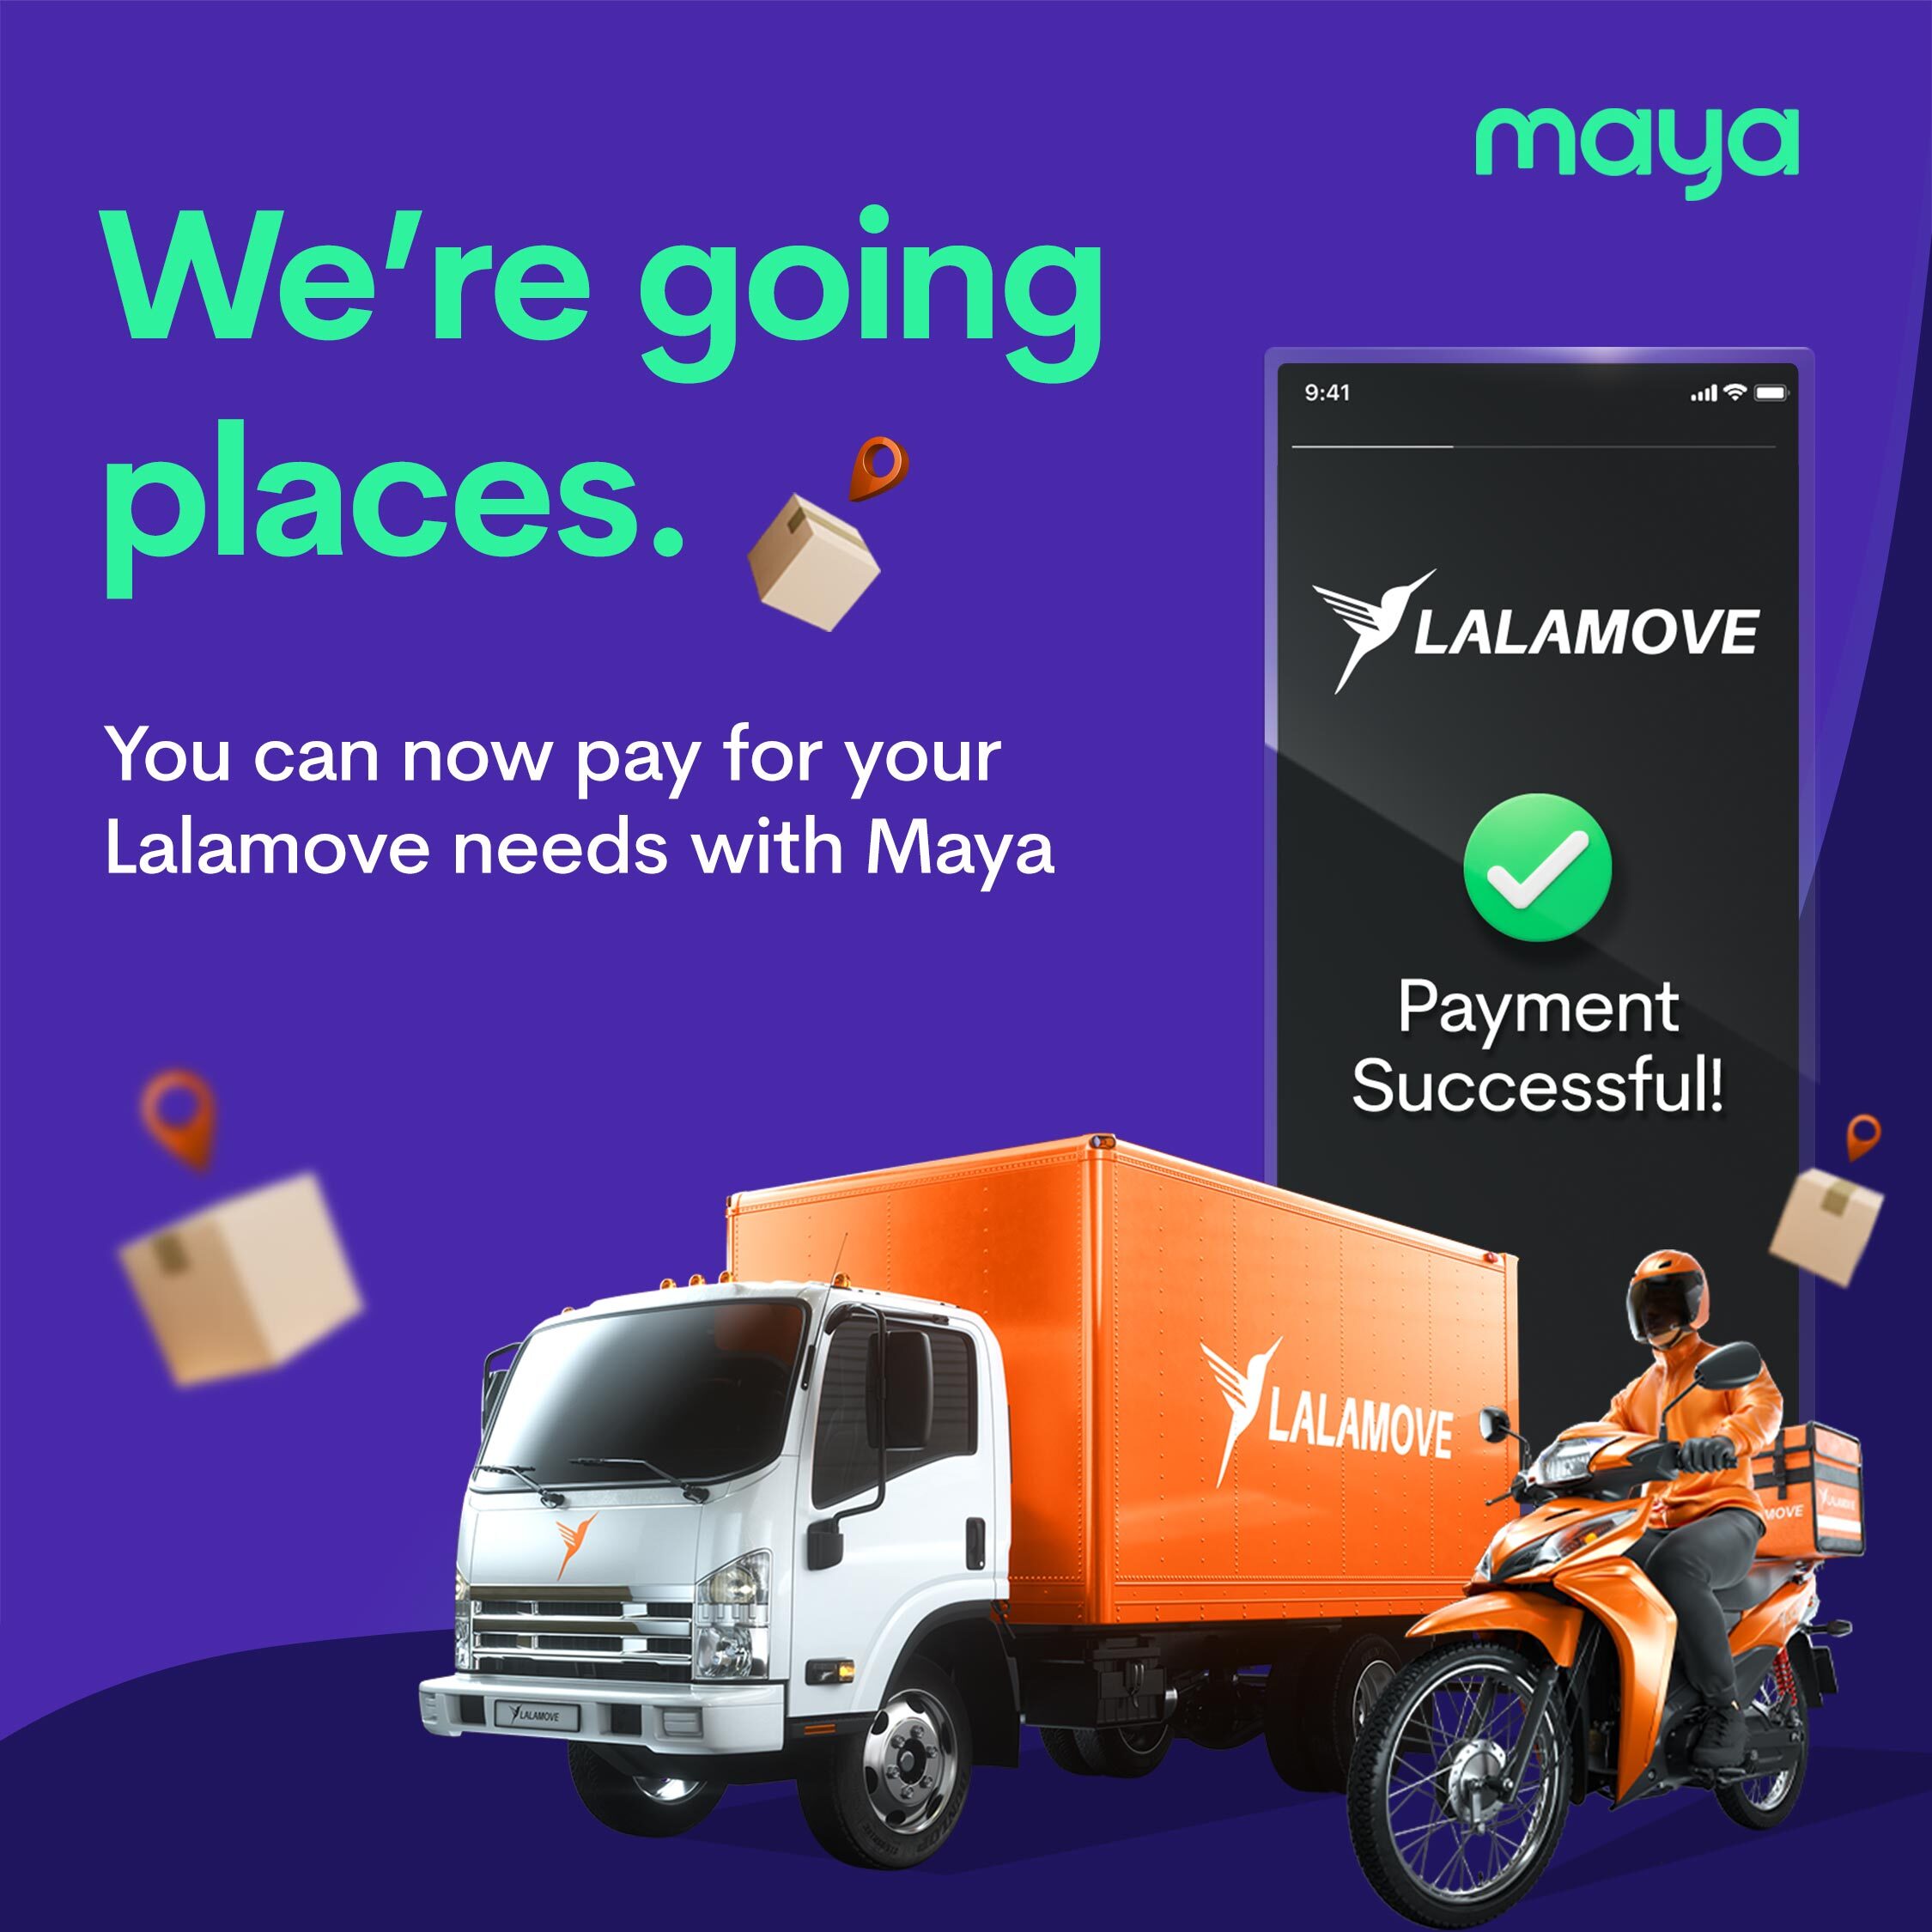 Maya makes Lalamove deliveries more convenient and rewarding